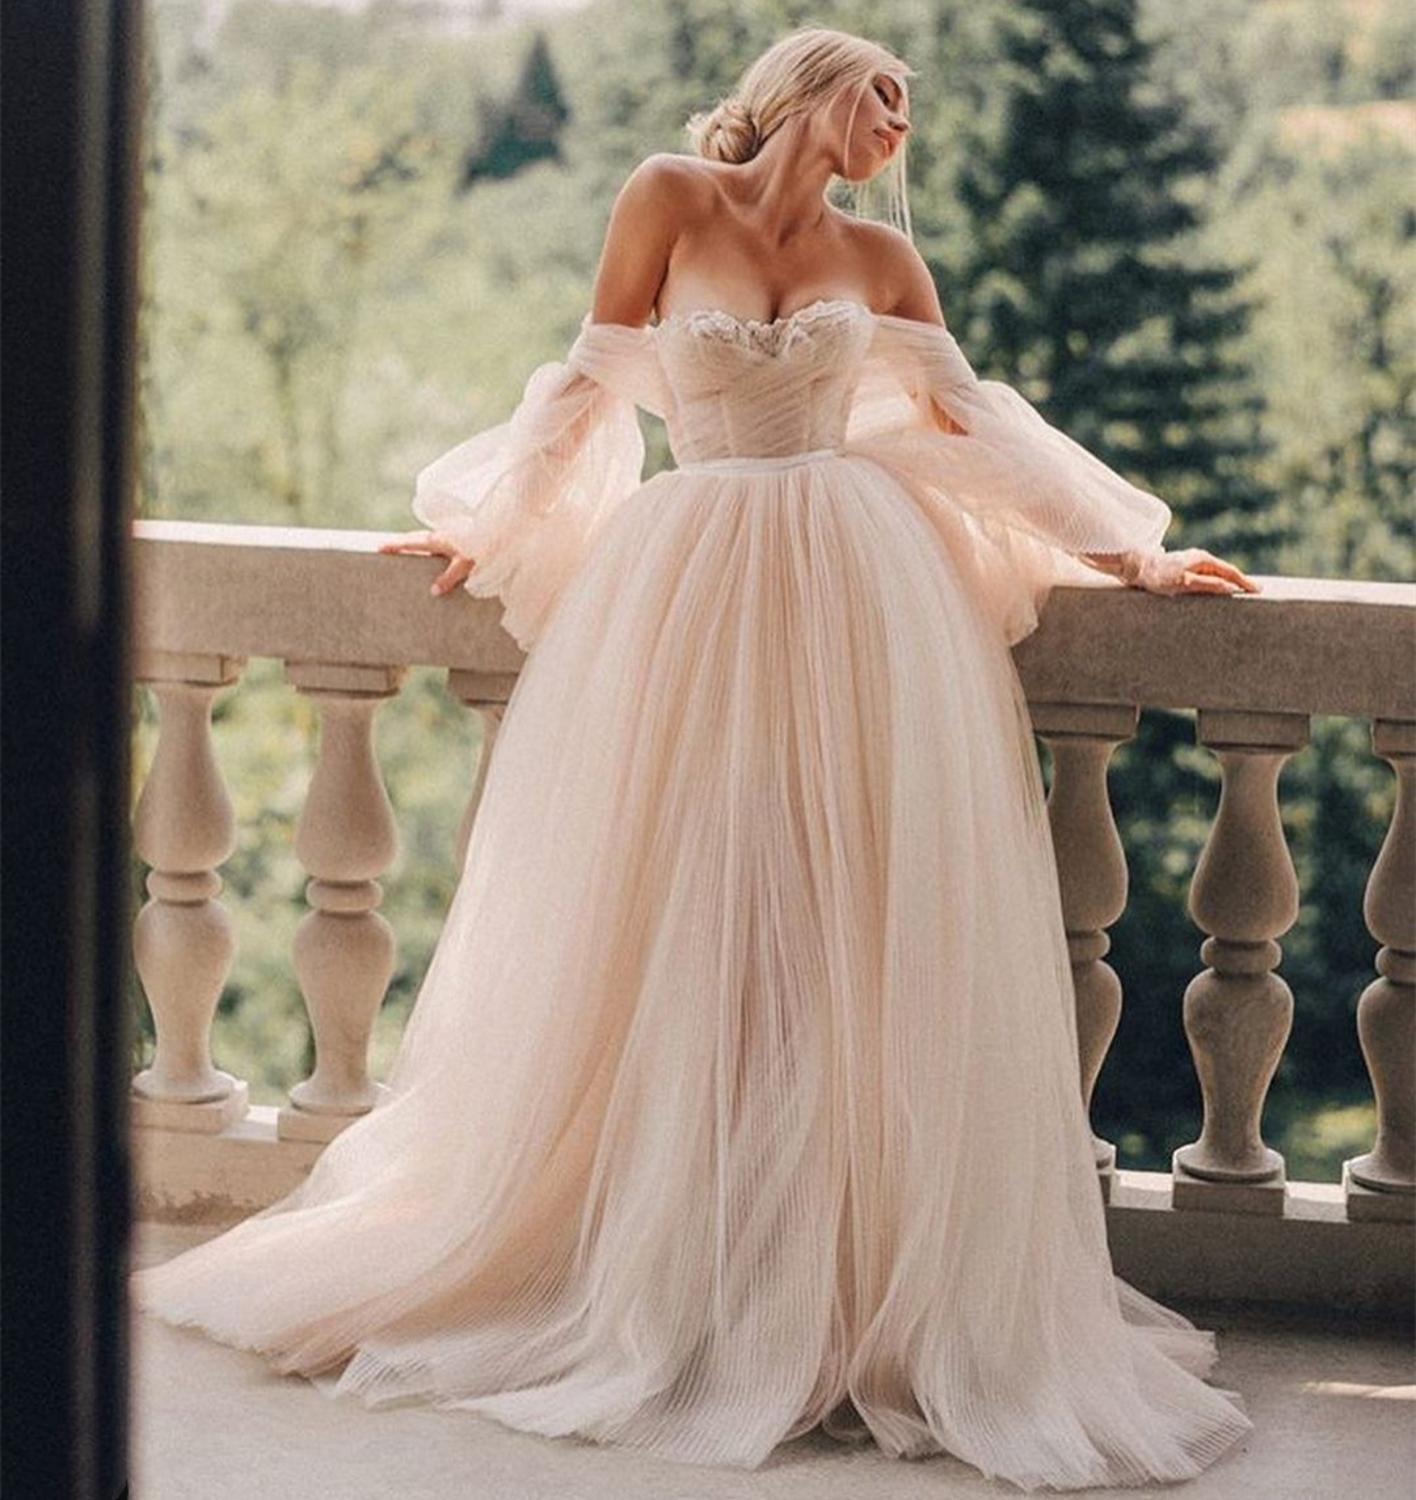 Alibaba Wedding Dress Reviews - June Bridals